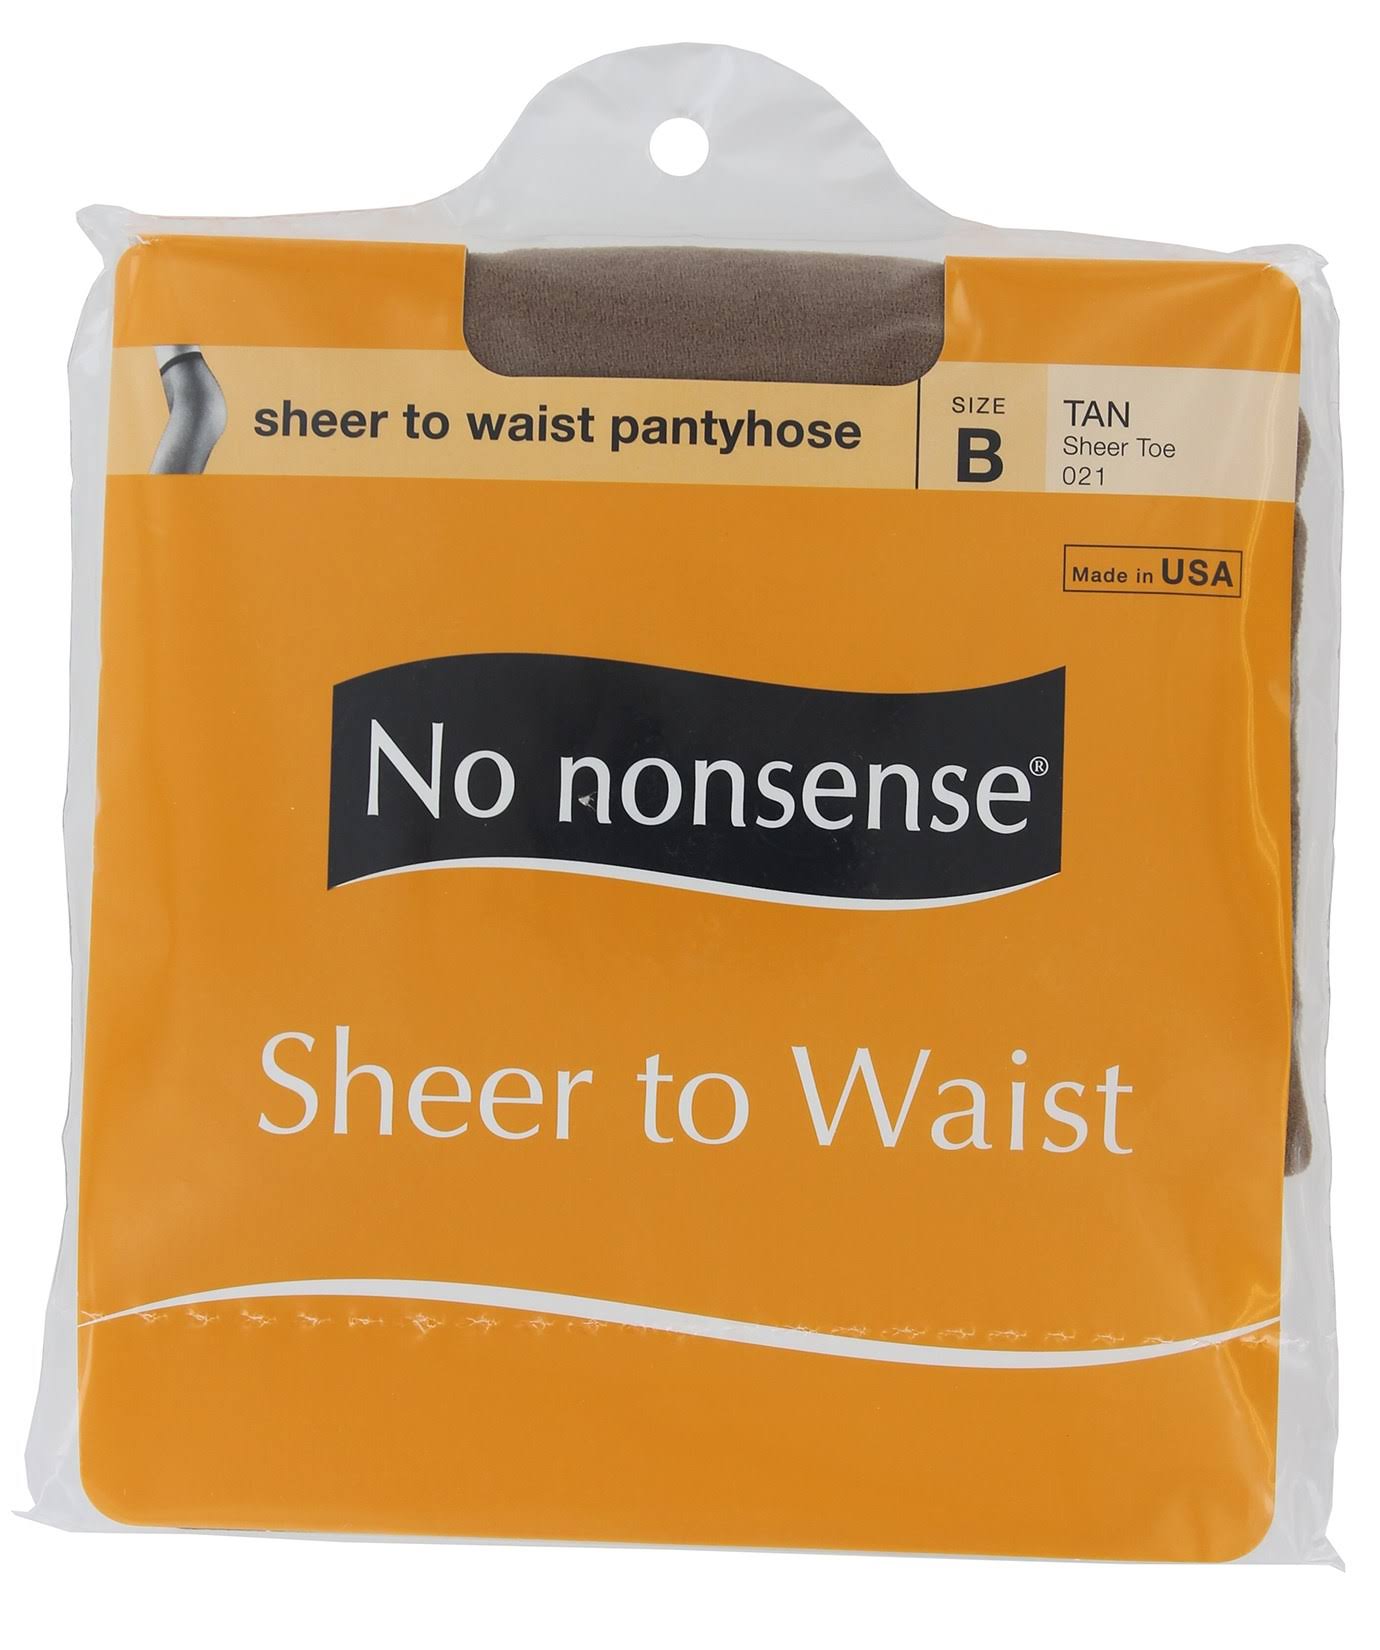 No Nonsense Sheer to Waist Pantyhose - Tan, Size B, x3